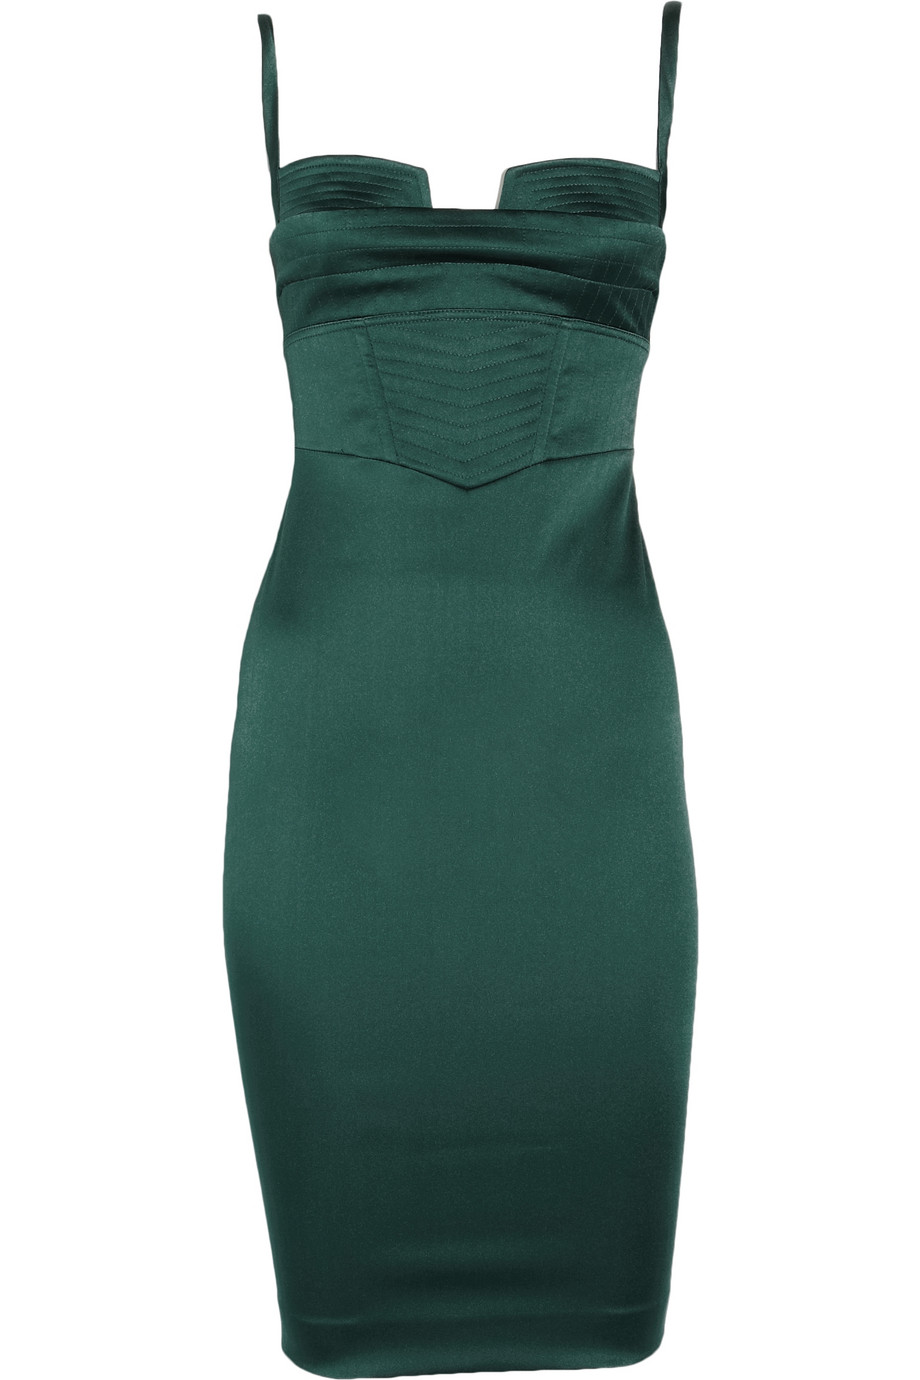 Just Cavalli Stretch-satin Bustier Dress in Green - Lyst